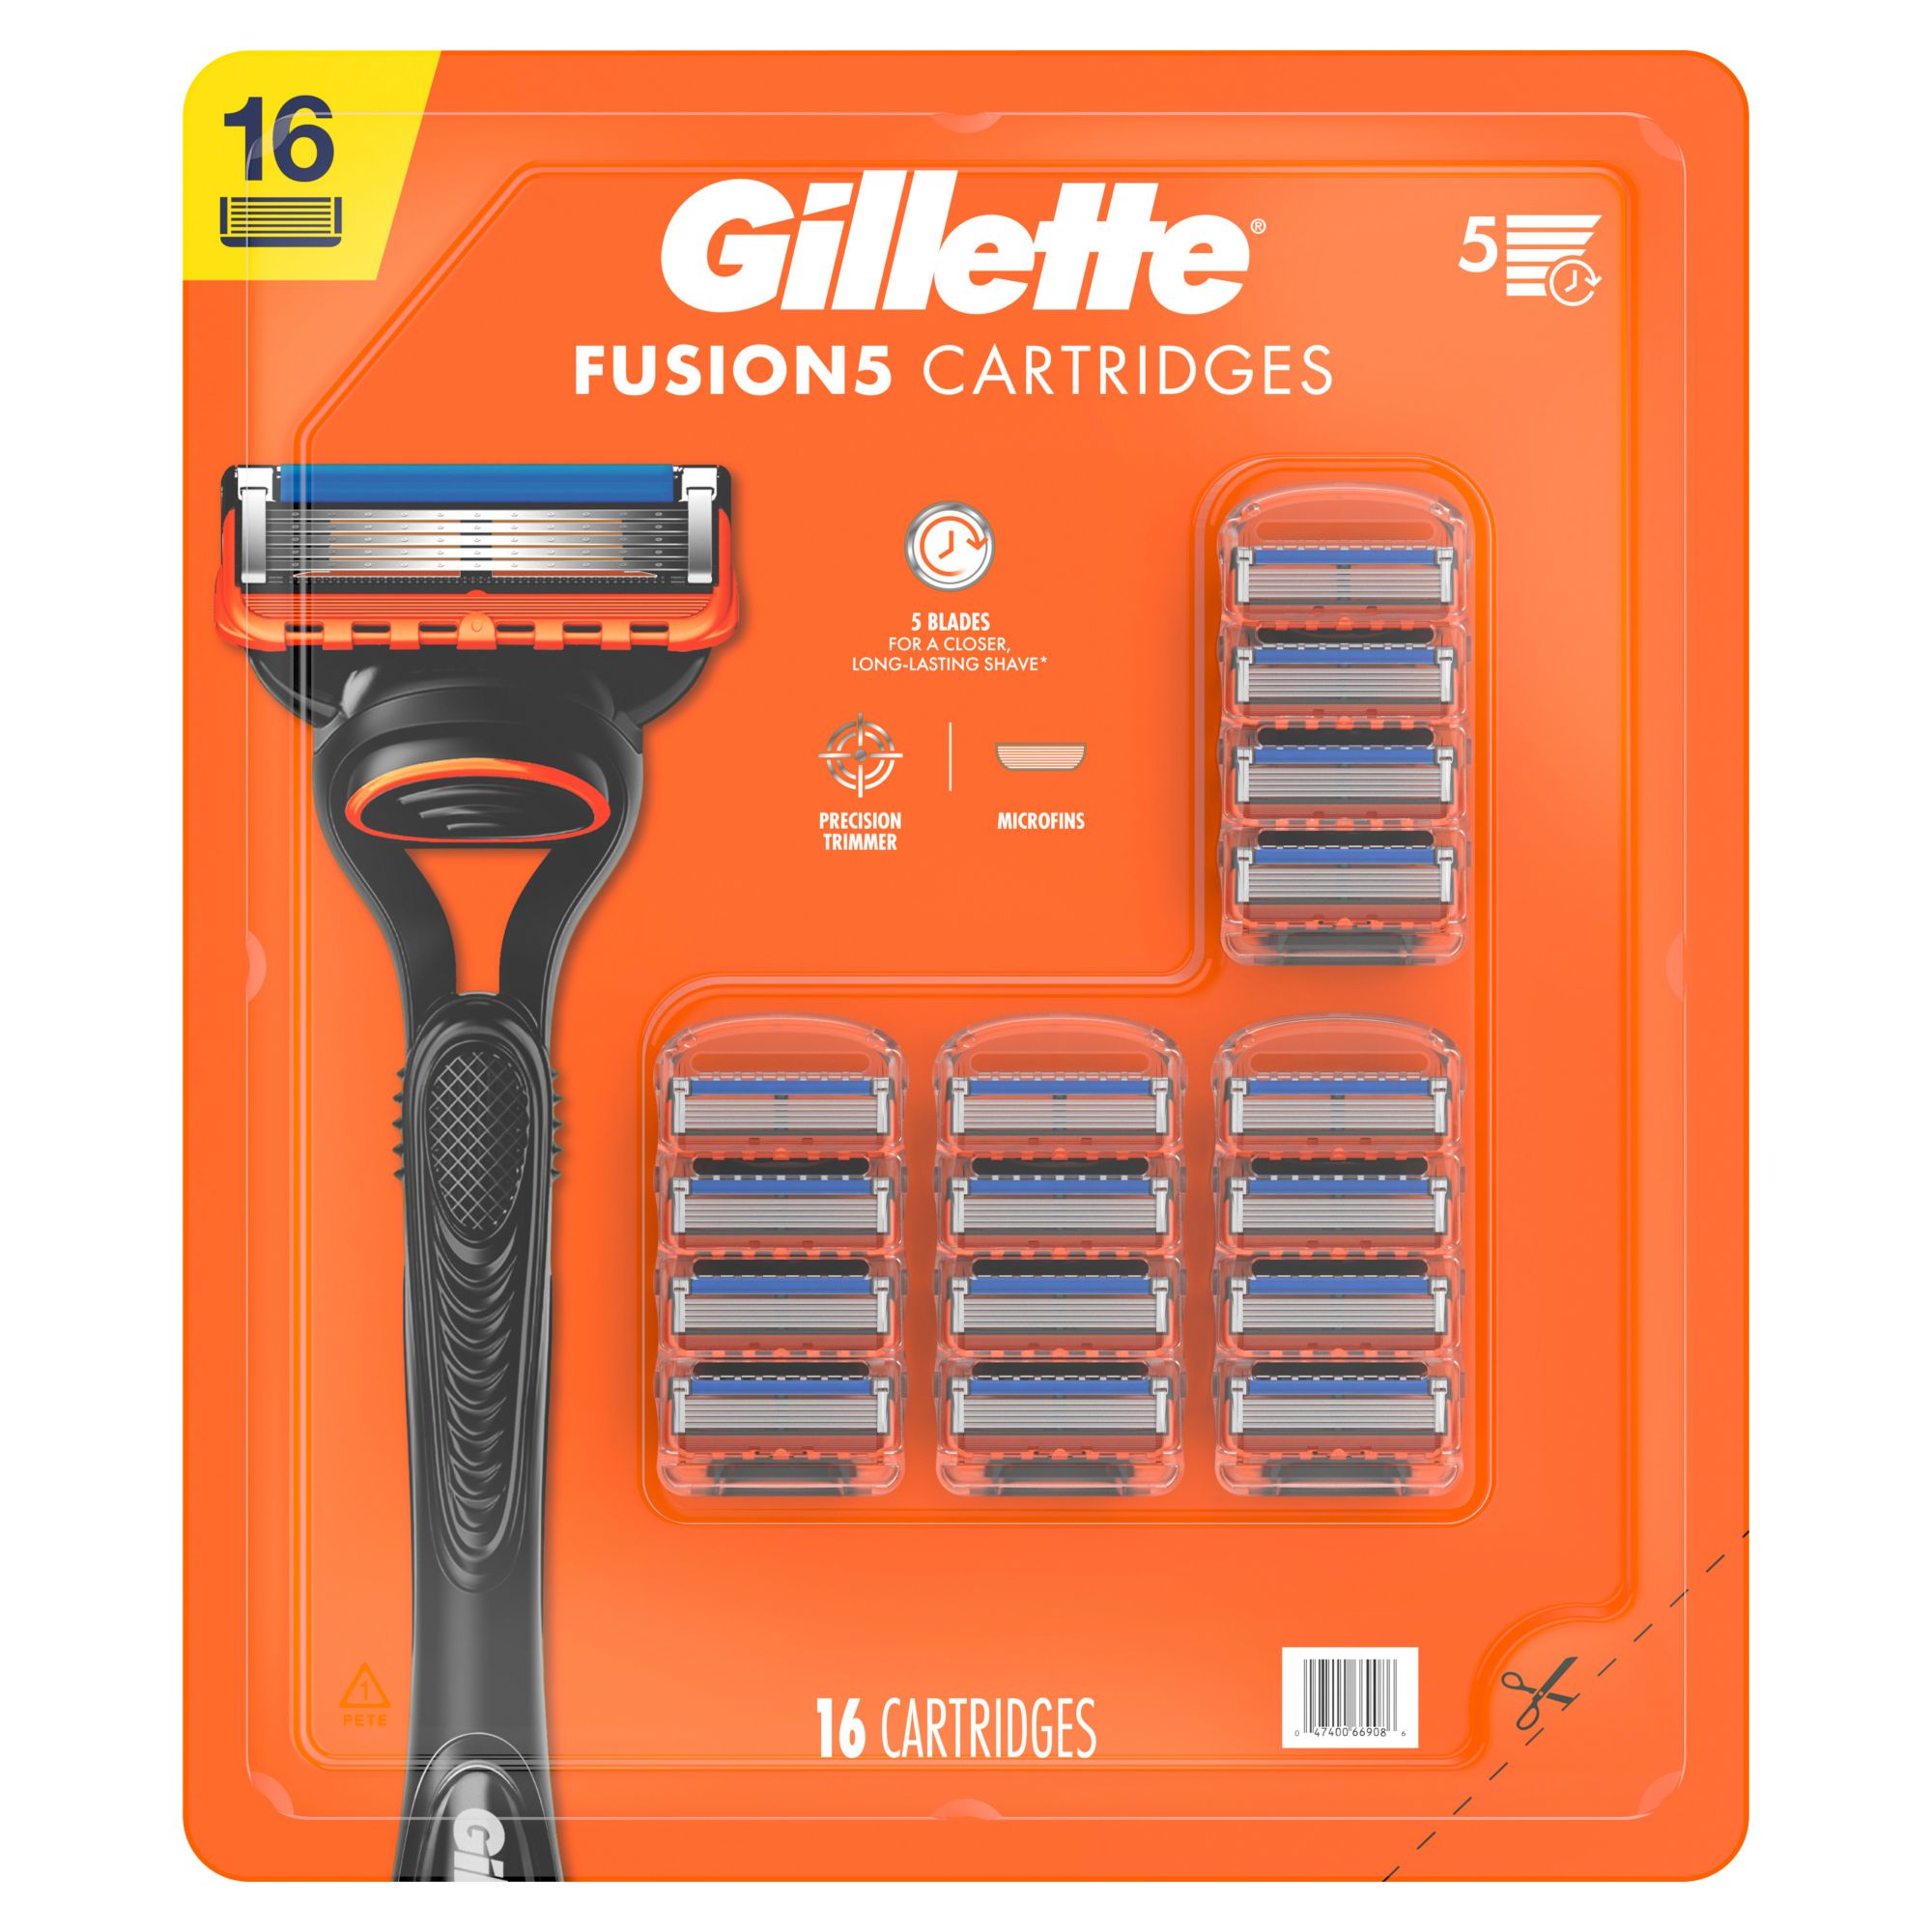 Gillette Fusion5 Razor Refills for Men, 16 ct.